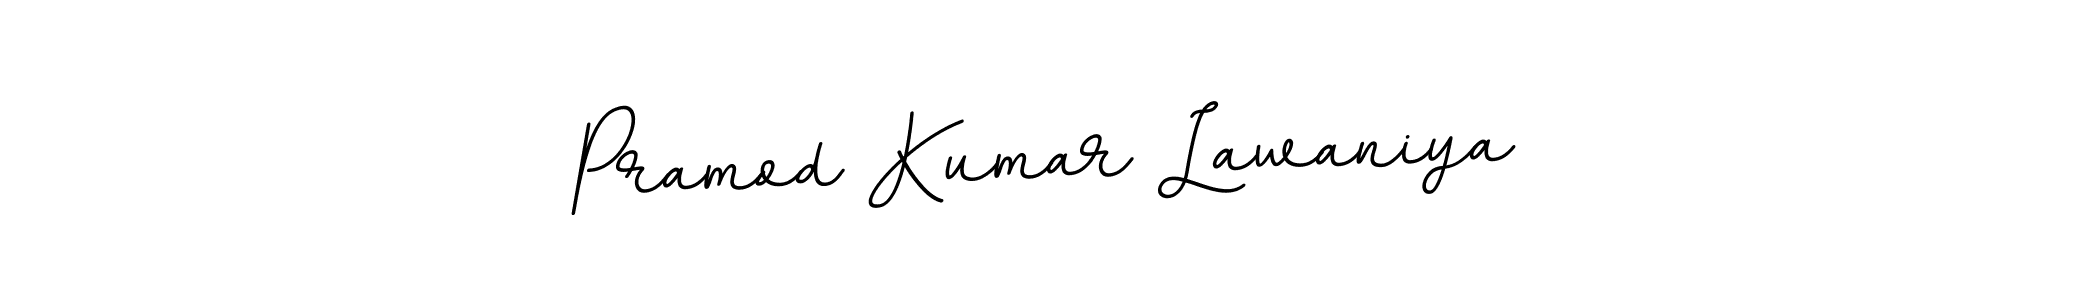 How to Draw Pramod Kumar Lawaniya signature style? BallpointsItalic-DORy9 is a latest design signature styles for name Pramod Kumar Lawaniya. Pramod Kumar Lawaniya signature style 11 images and pictures png